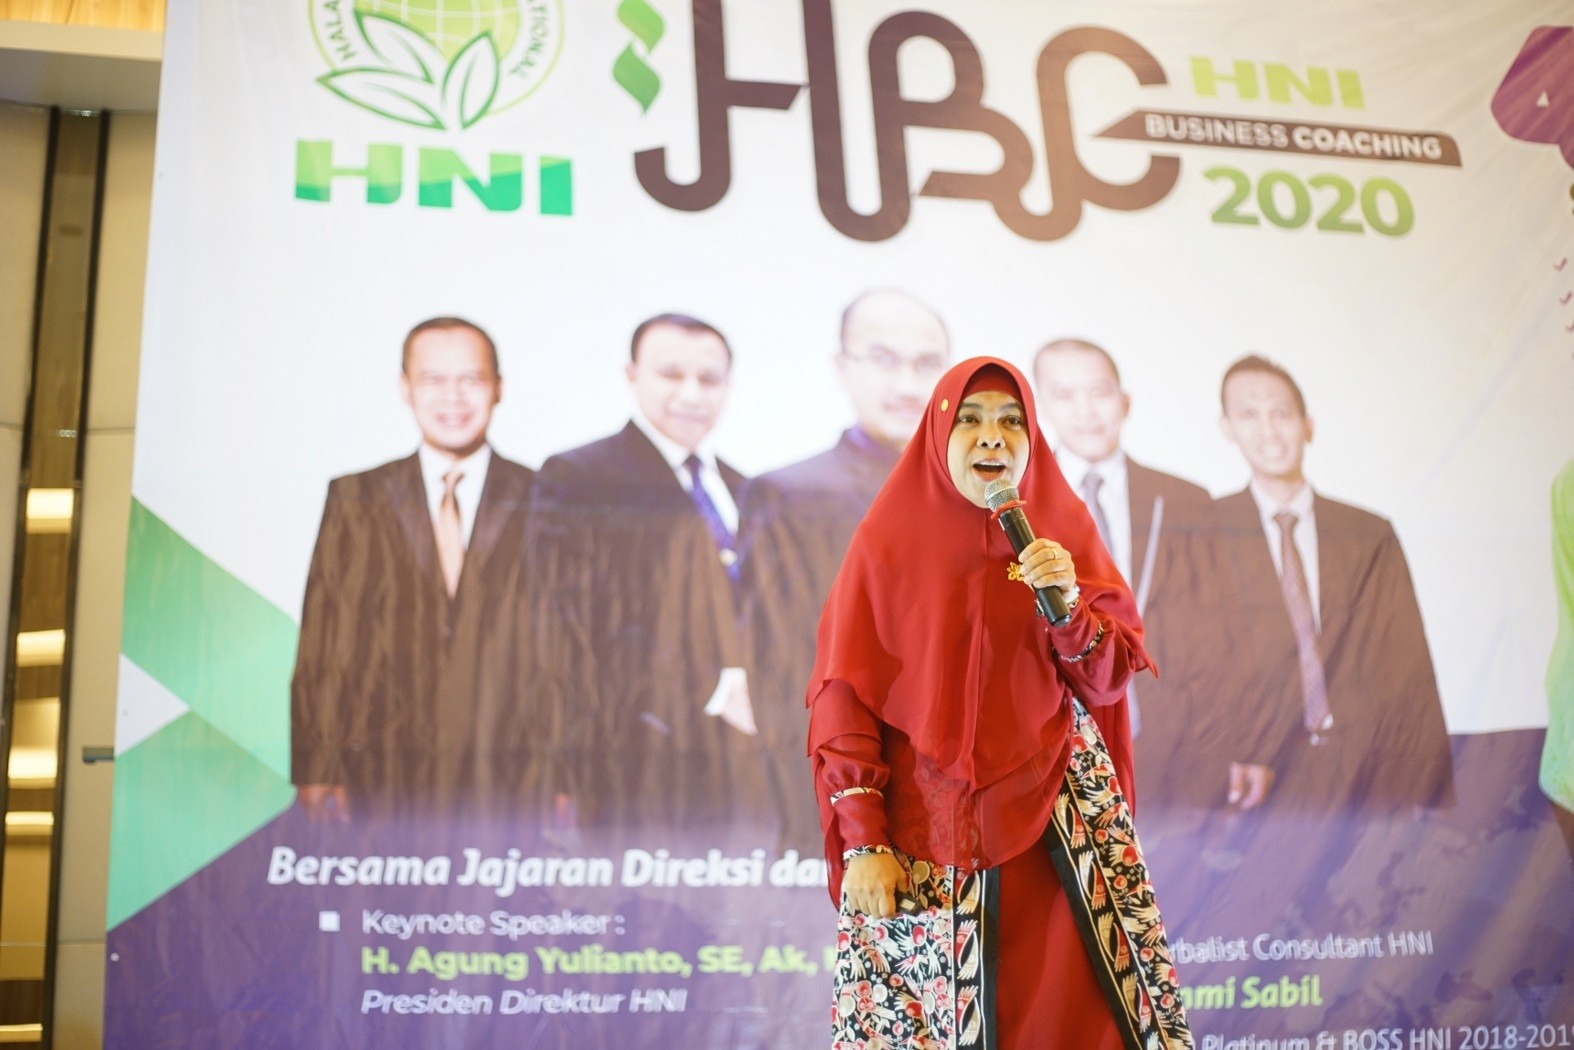 HBC Bekasi 2020